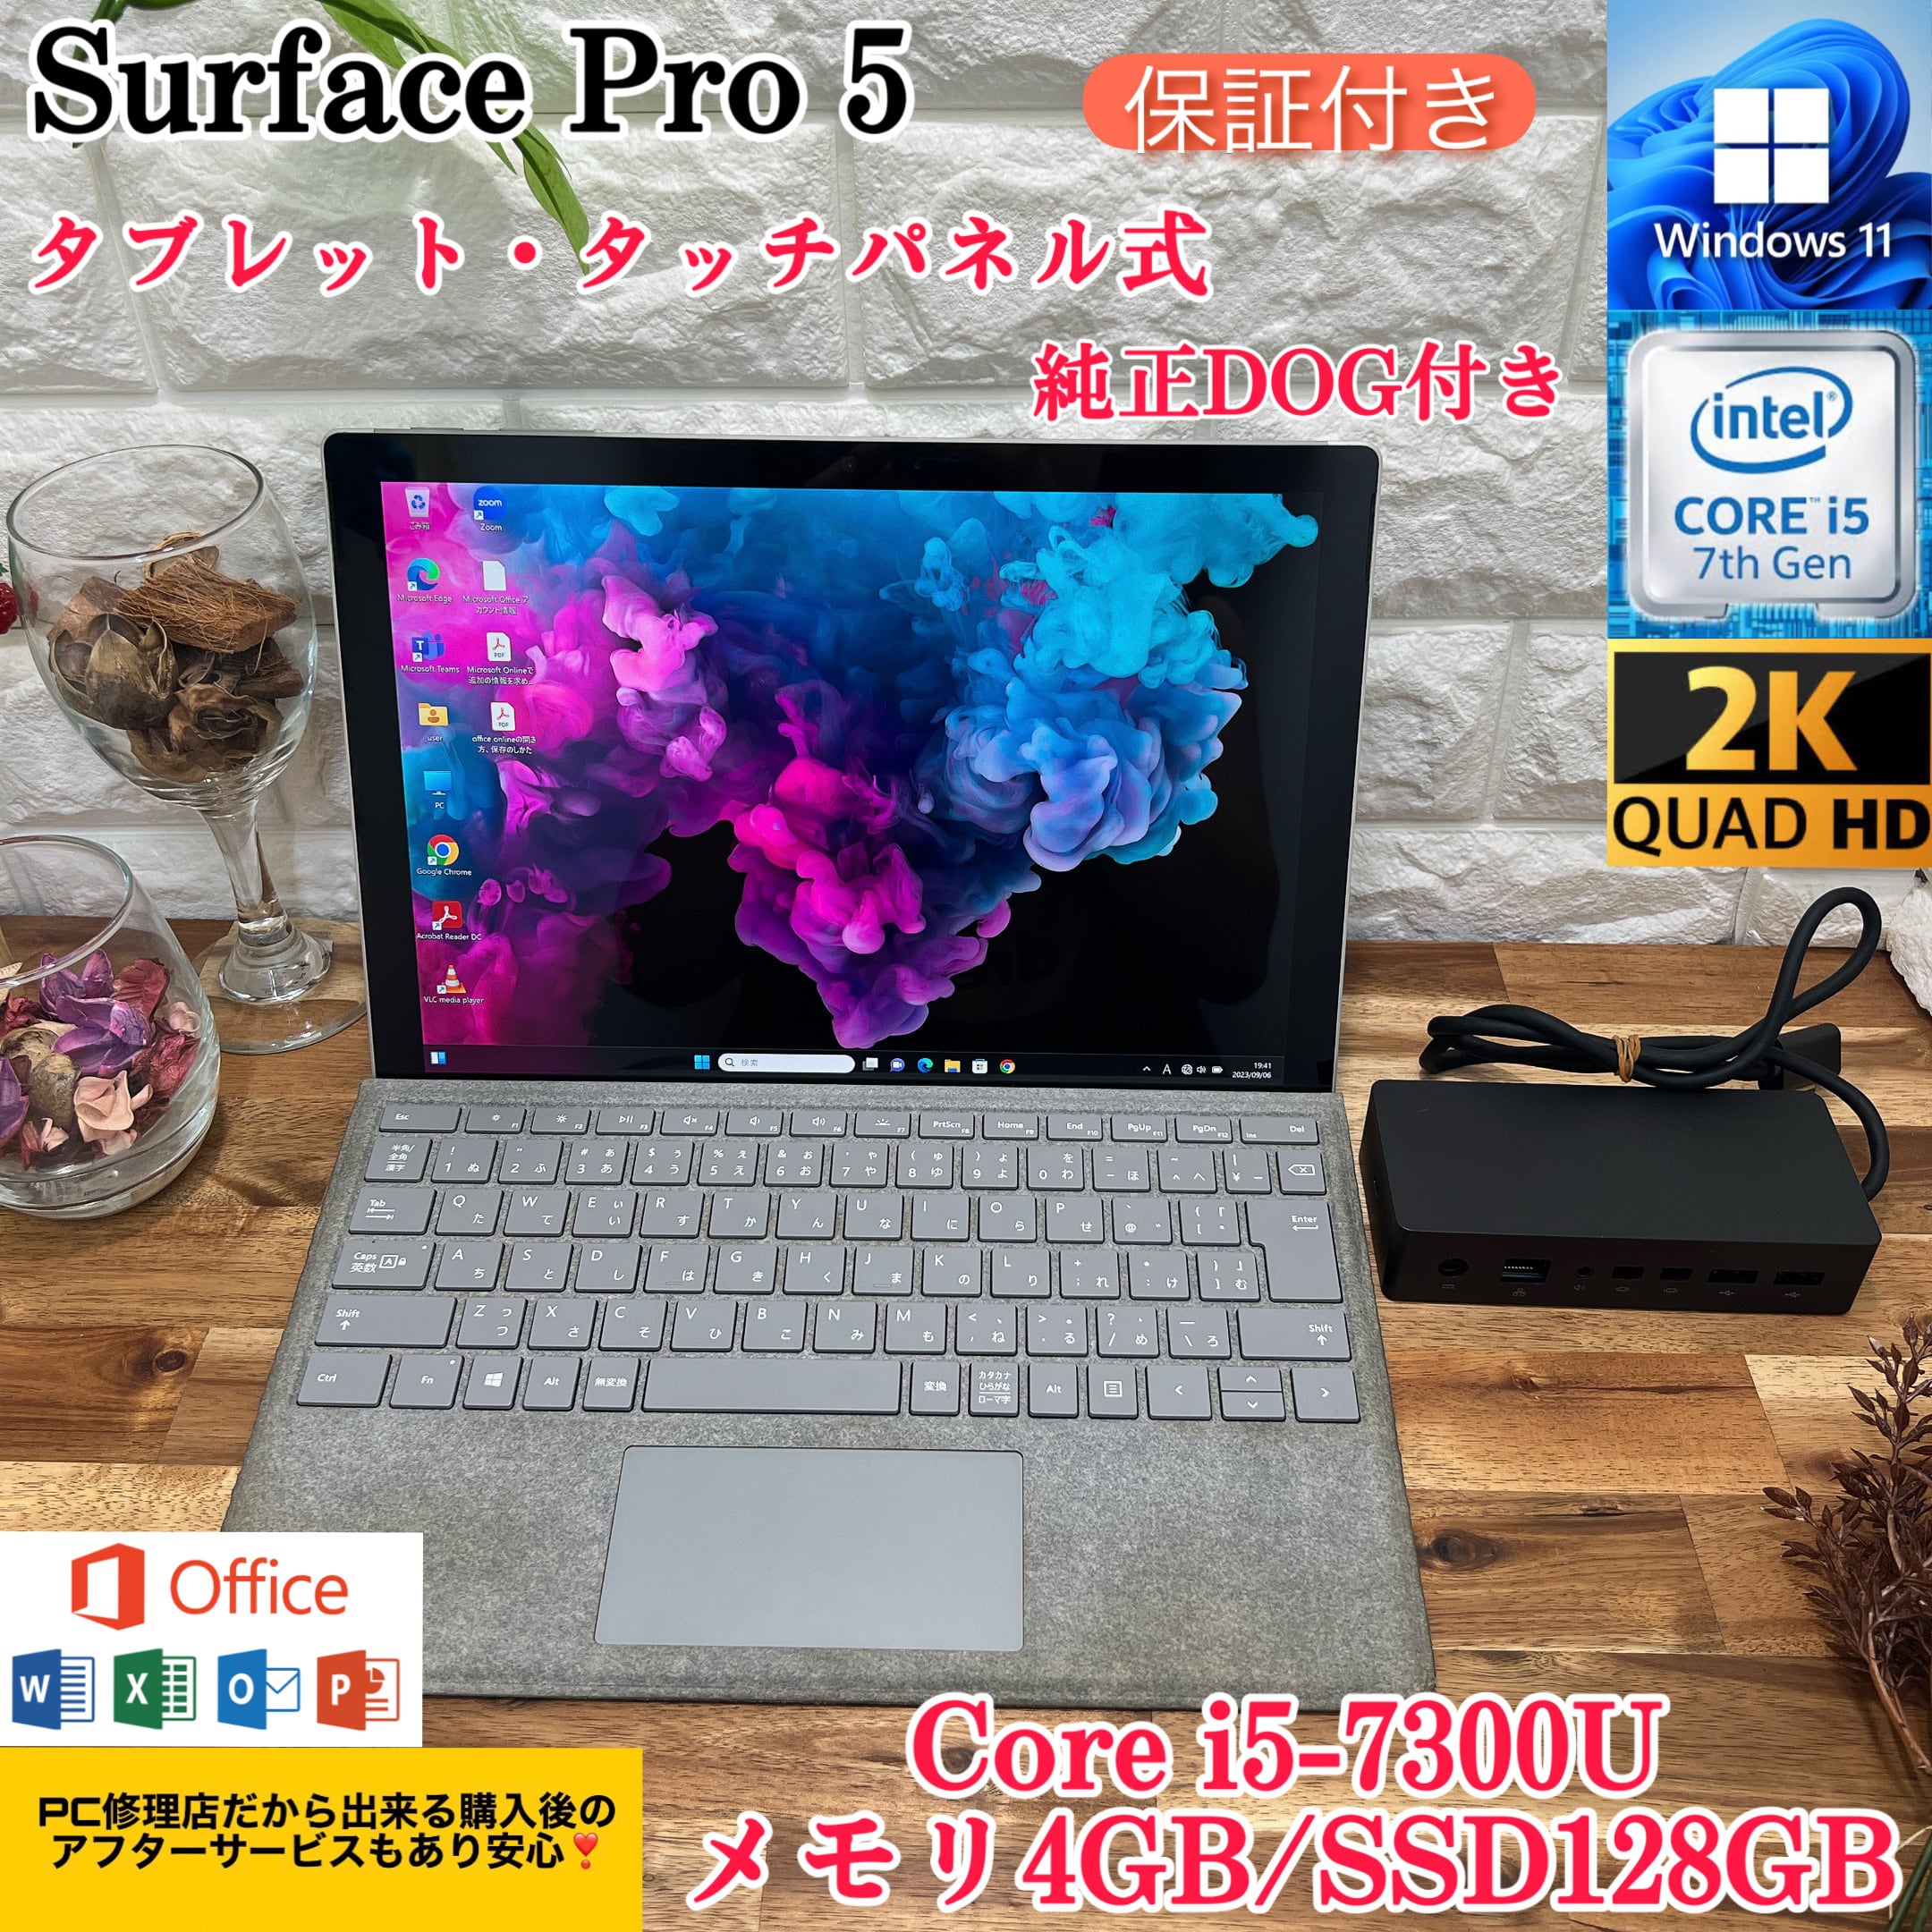 Surface laptop☘爆速SSD256GB搭載☘Core i5第7世代 | ほんぽくんのPC